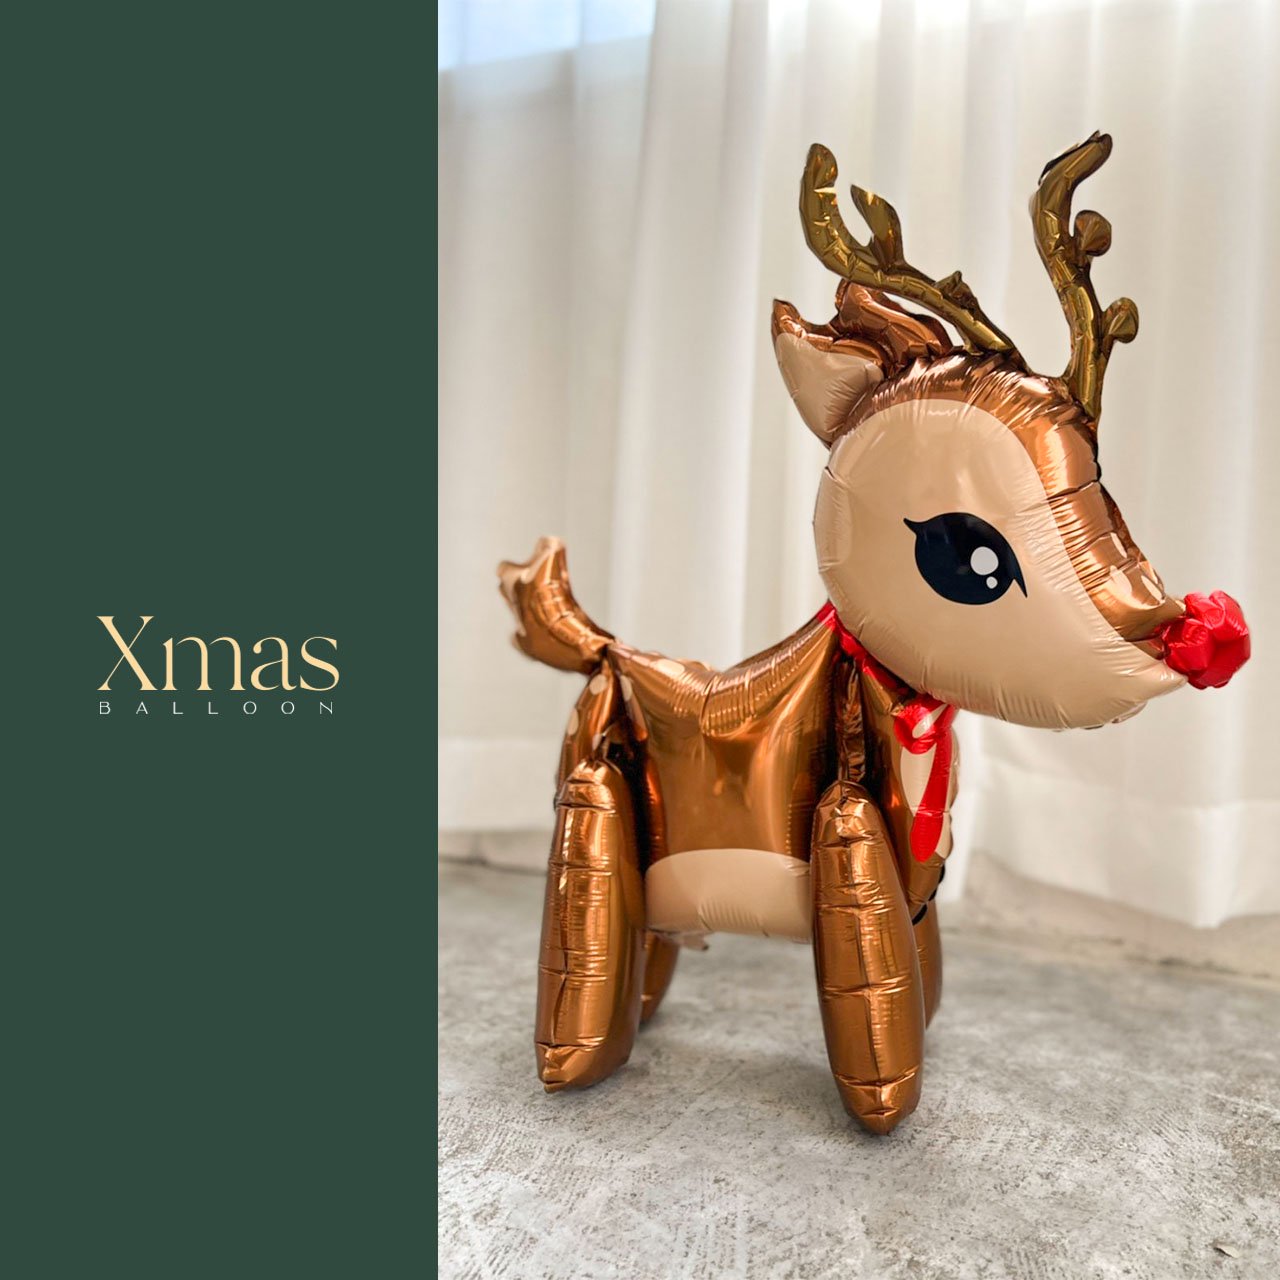 Reindeer Xmas Balloon - トナカイお散歩バルーン - クリスマスバルーン飾り付け&プレゼント